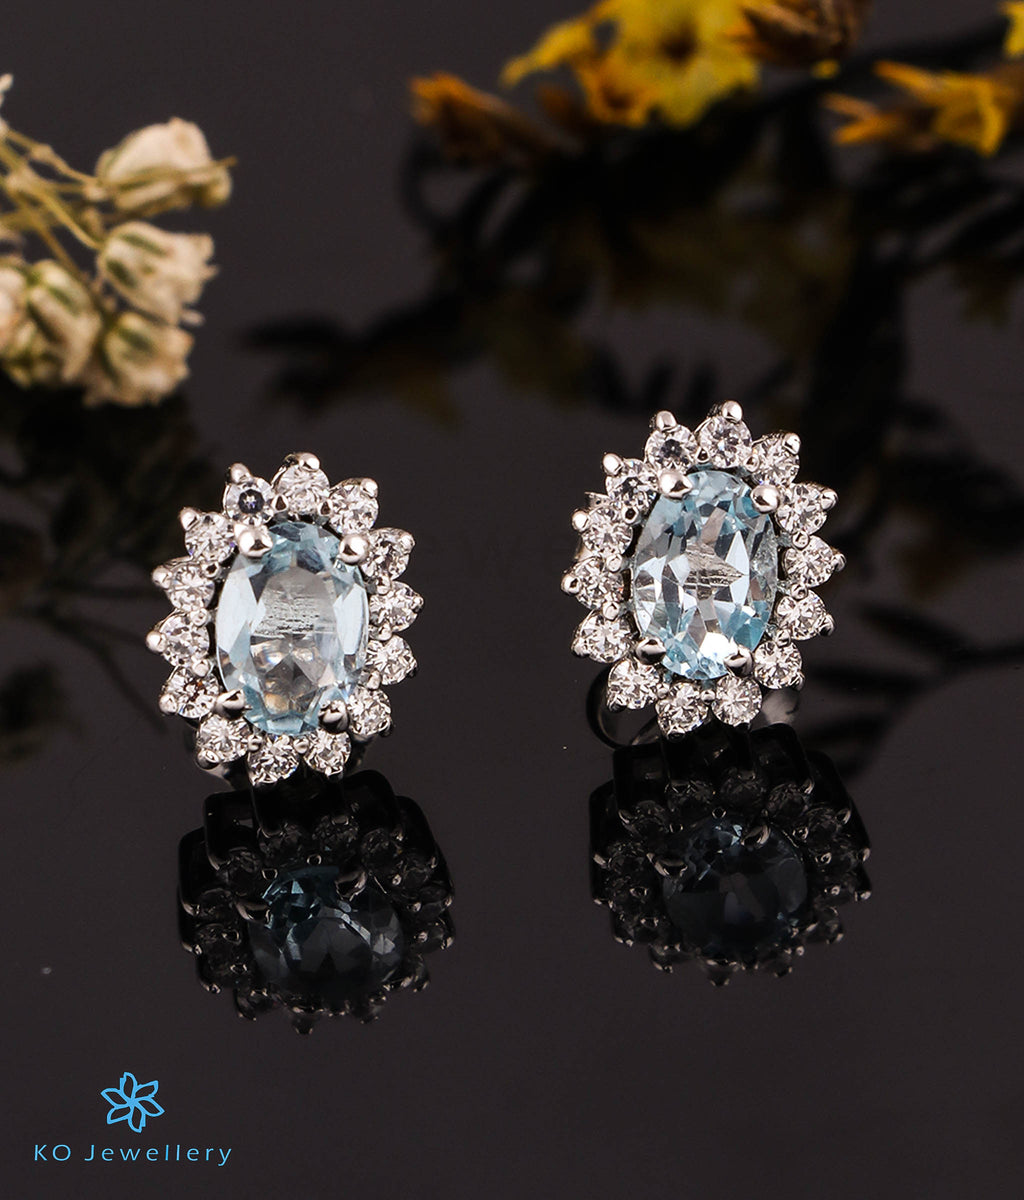 Gemstone jewellery online shopping - gem earrings, rings, necklaces ...